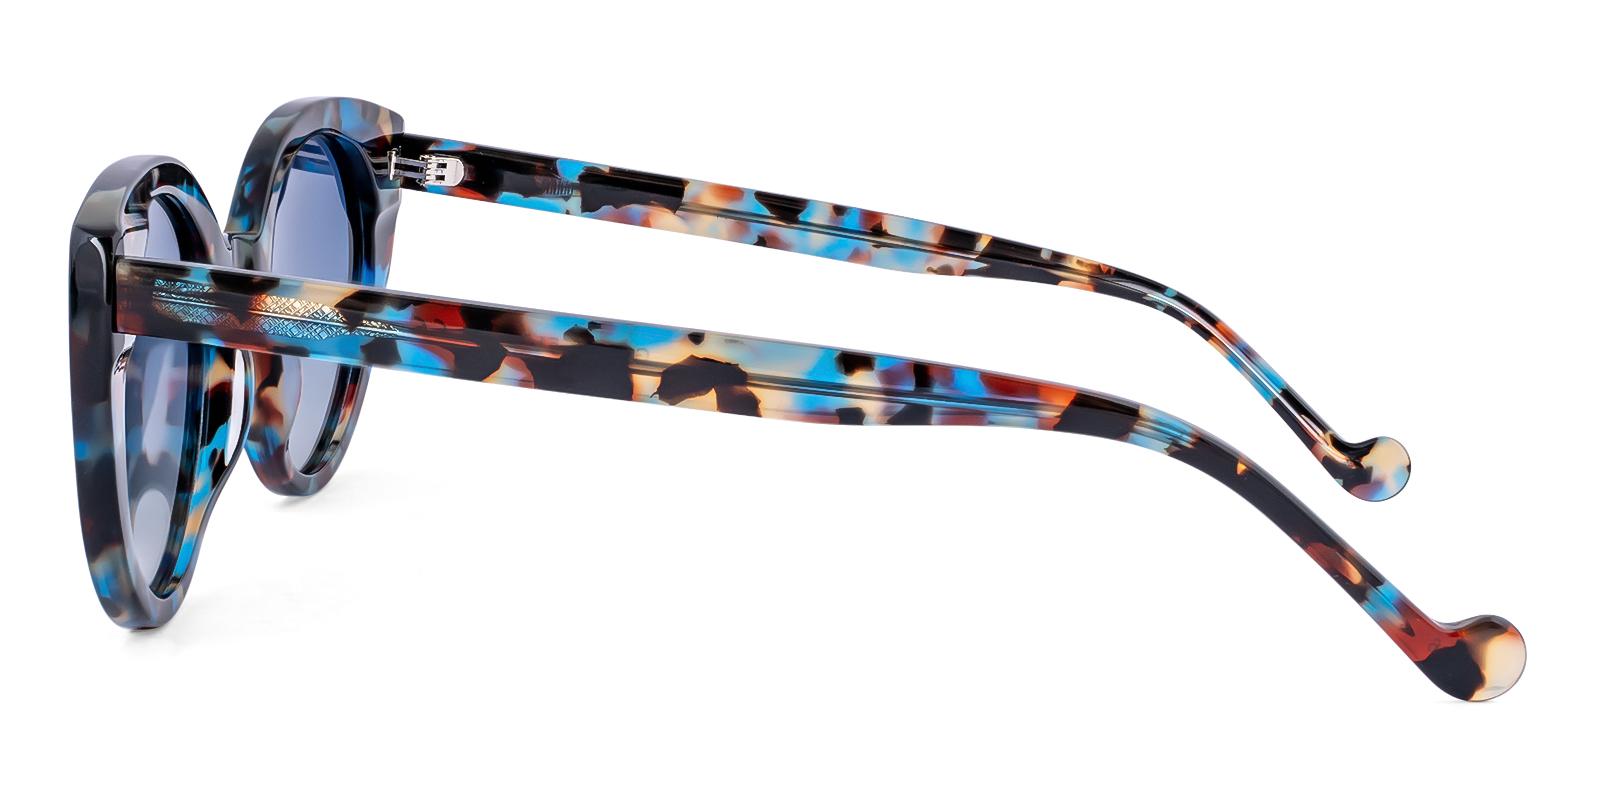 Pensel Pattern Acetate Sunglasses , UniversalBridgeFit Frames from ABBE Glasses